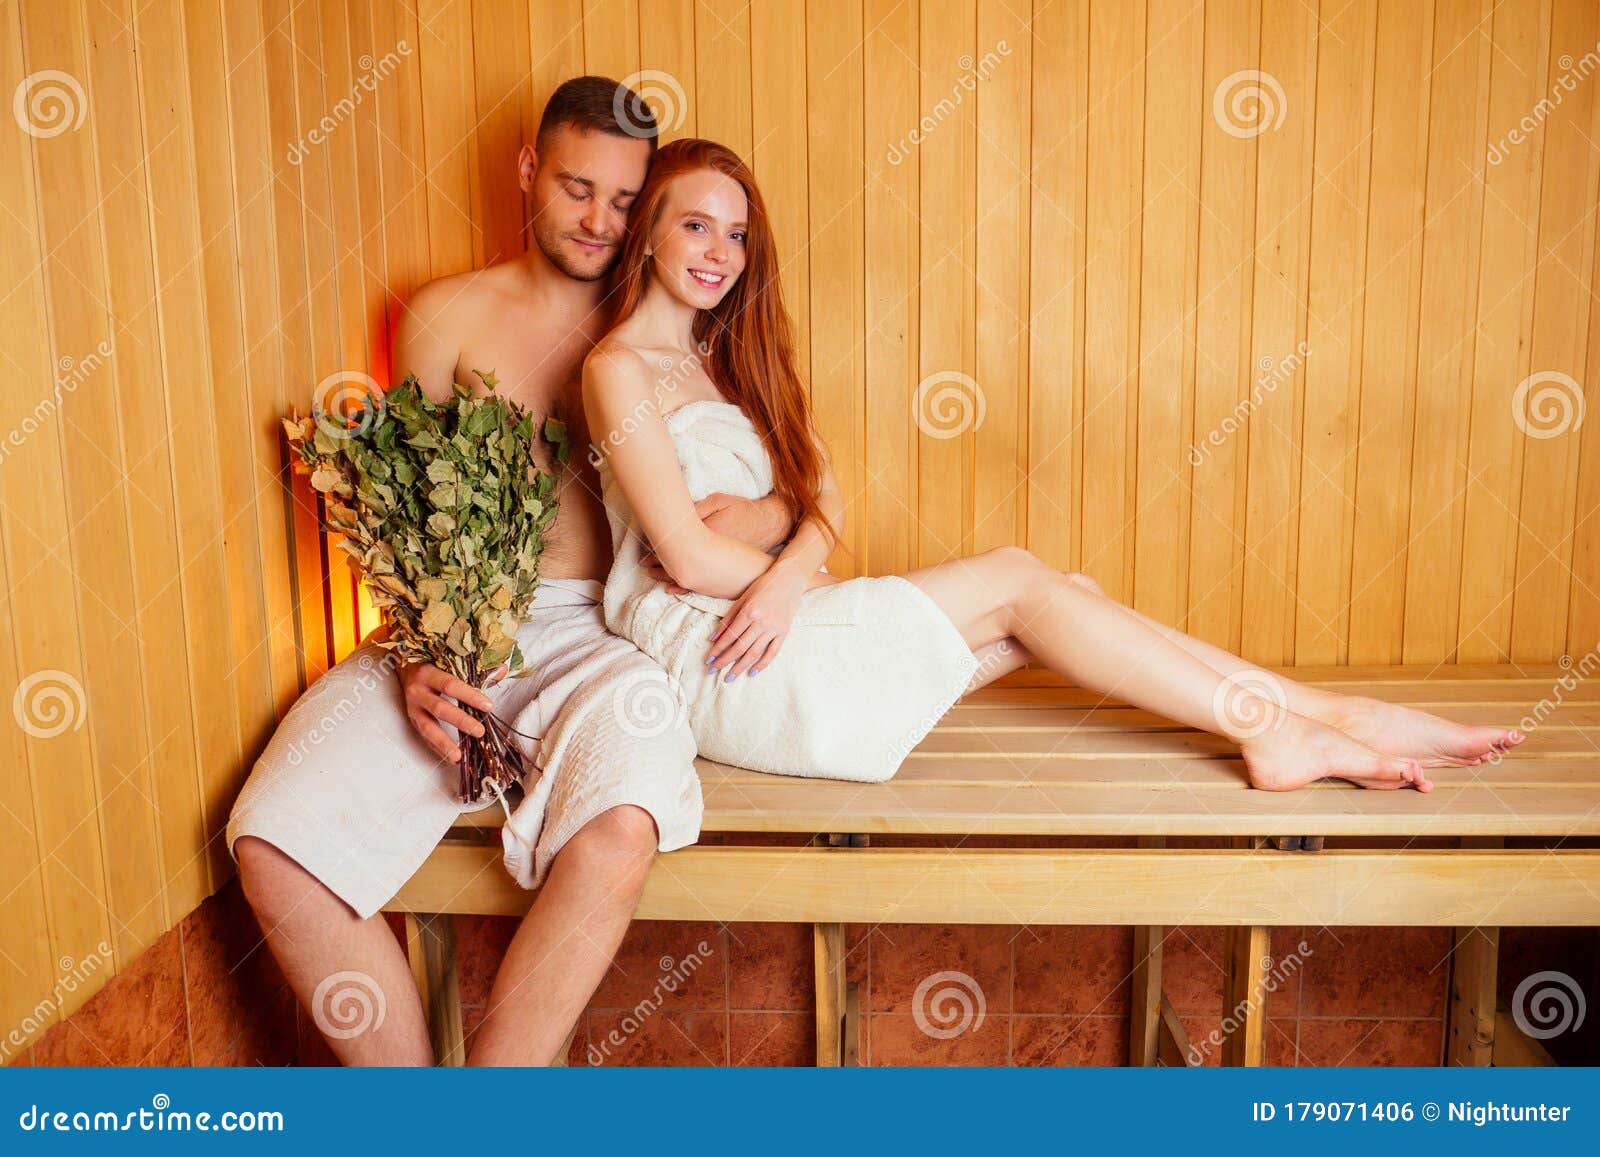 Hot Russian Couple